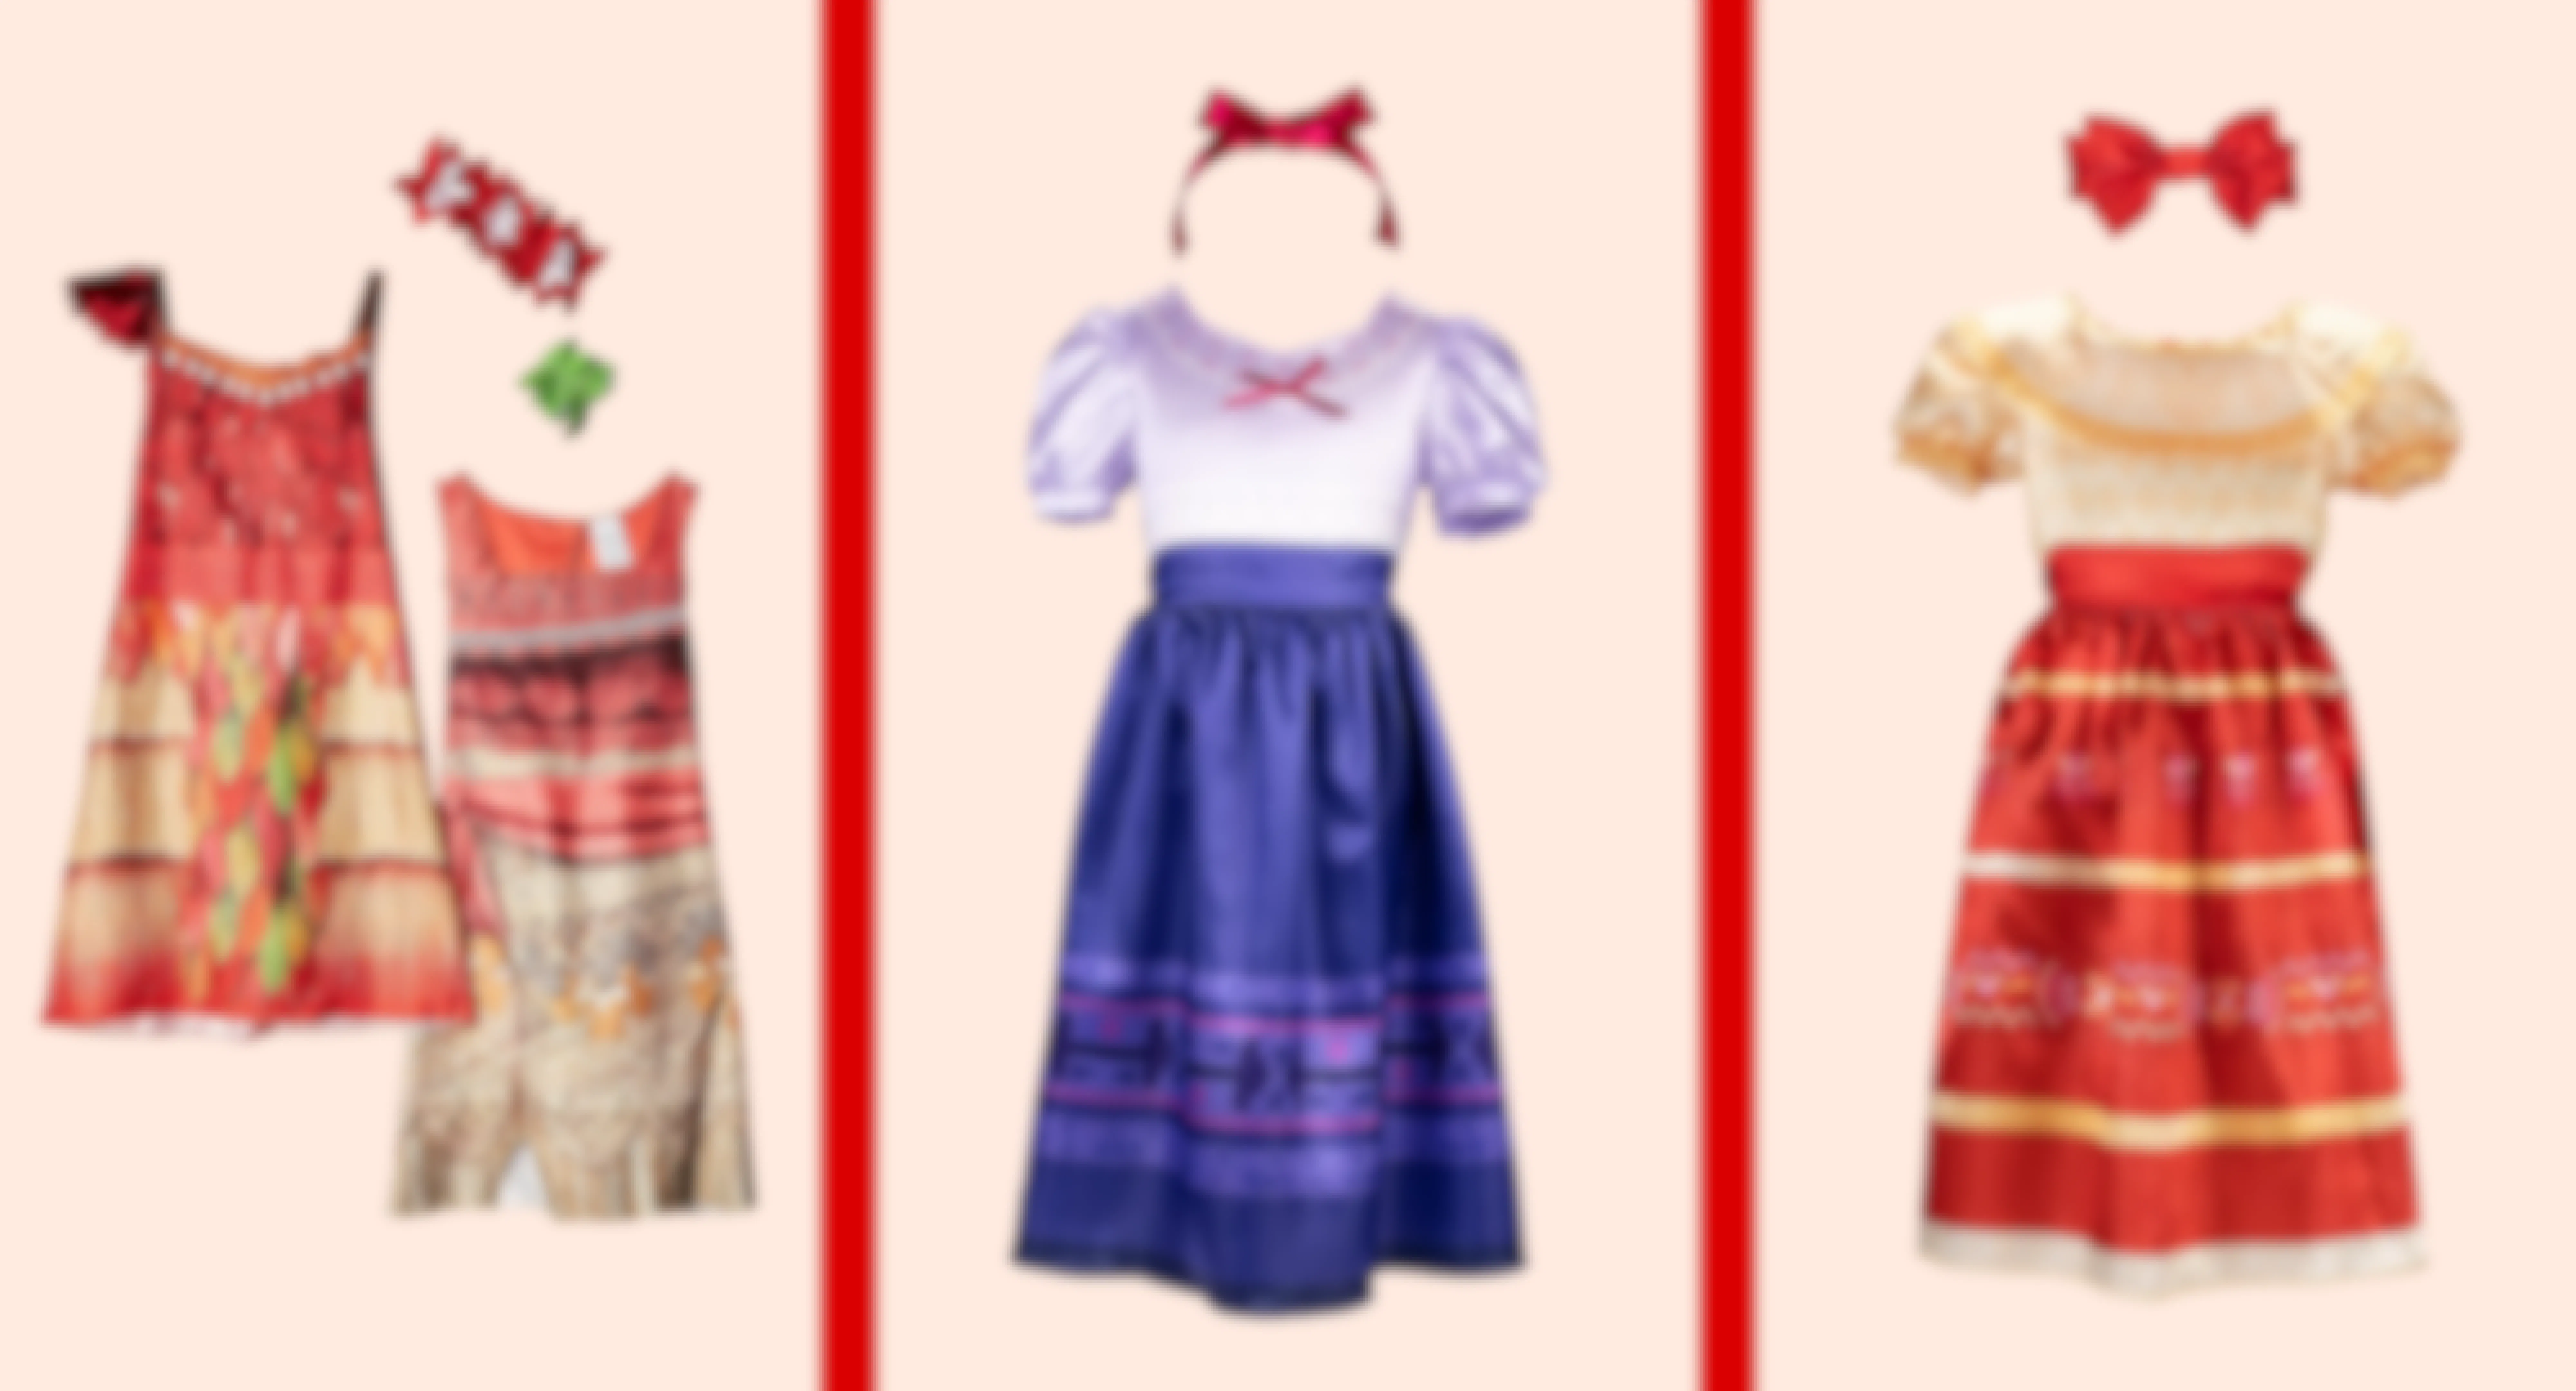 Disney Halloween Costumes: Encanto Dresses Starting at $10, $30 Moana Dress